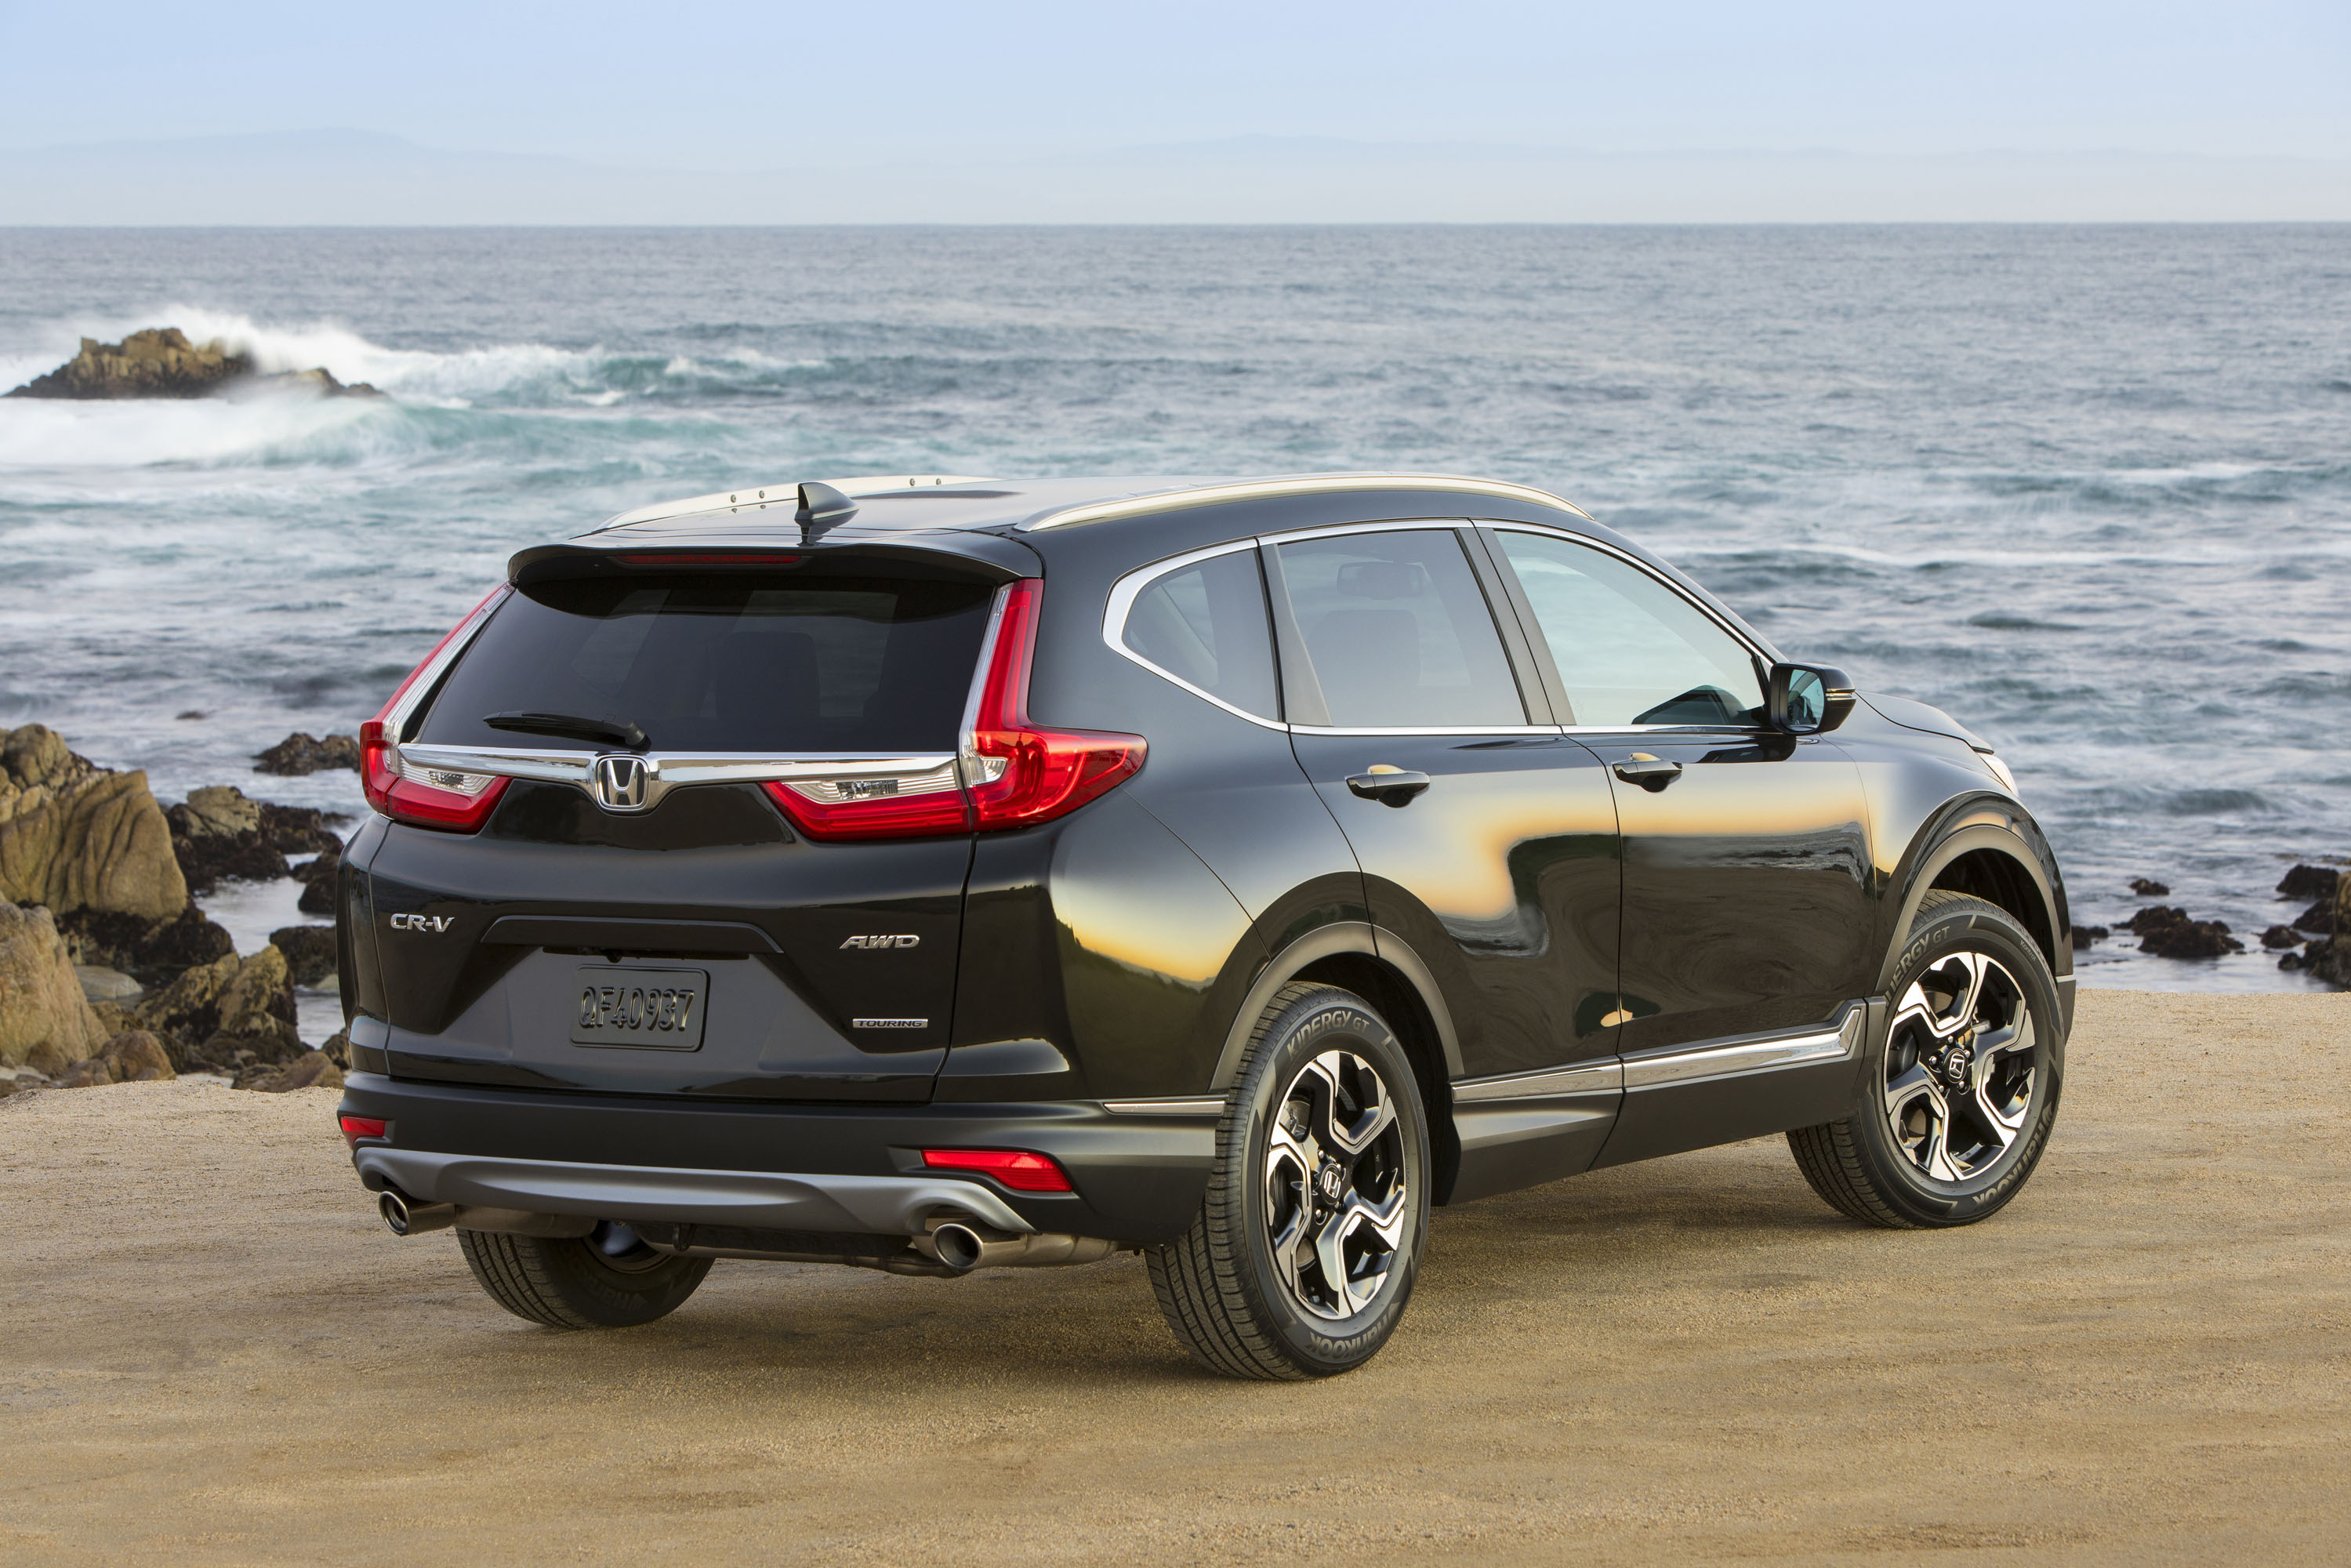 119K 2019 Honda CR-V crossover SUVs recalled to fix airbags